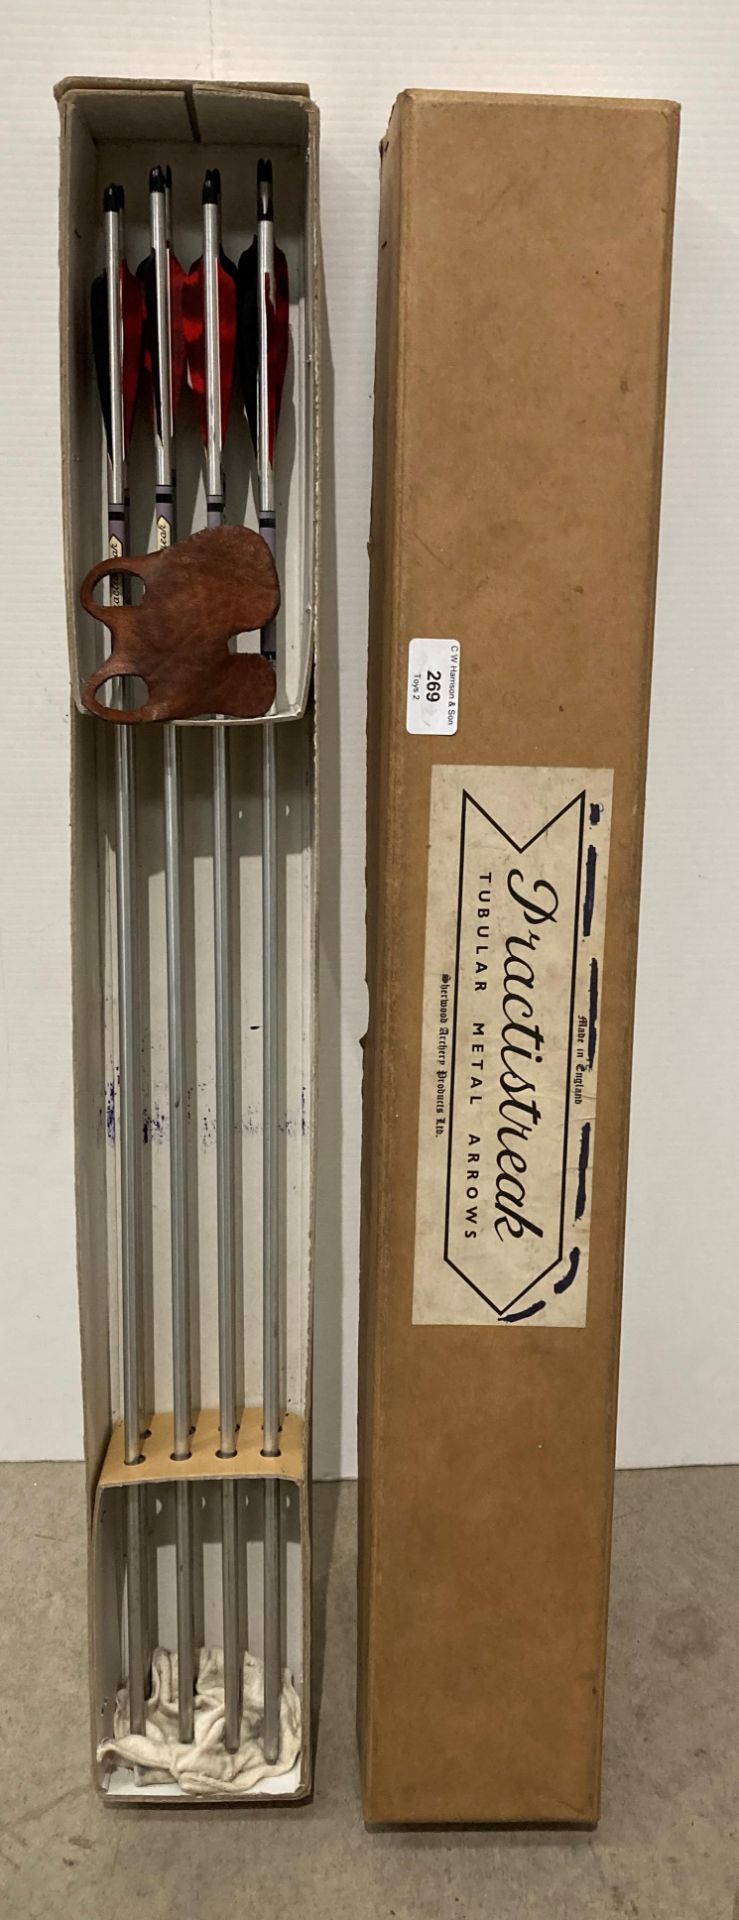 Eight Practistreak tubular metal arrows by Sherwood Archery Products Ltd in original box (S1 T1)